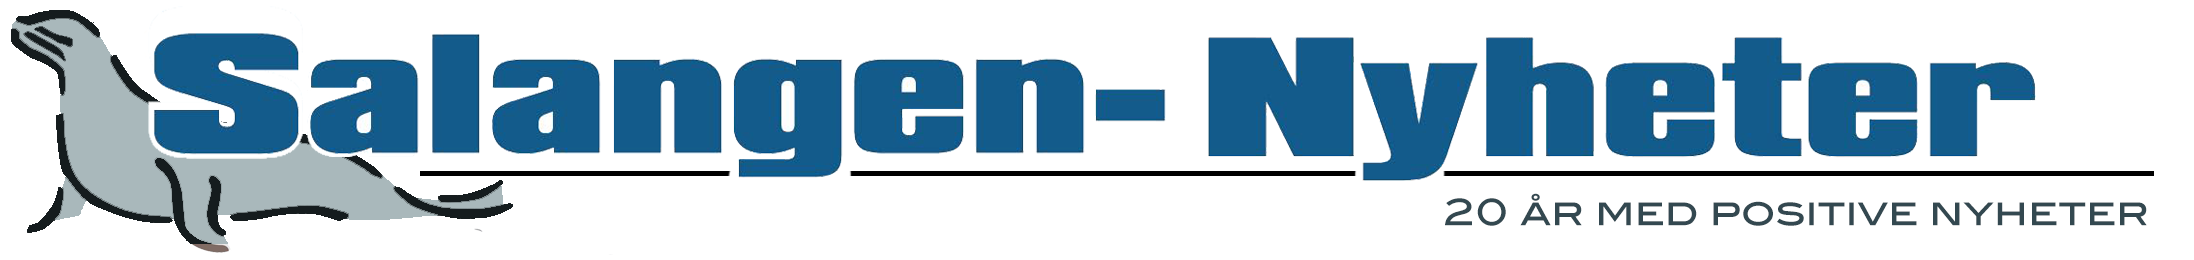 Salangen nyheter logo